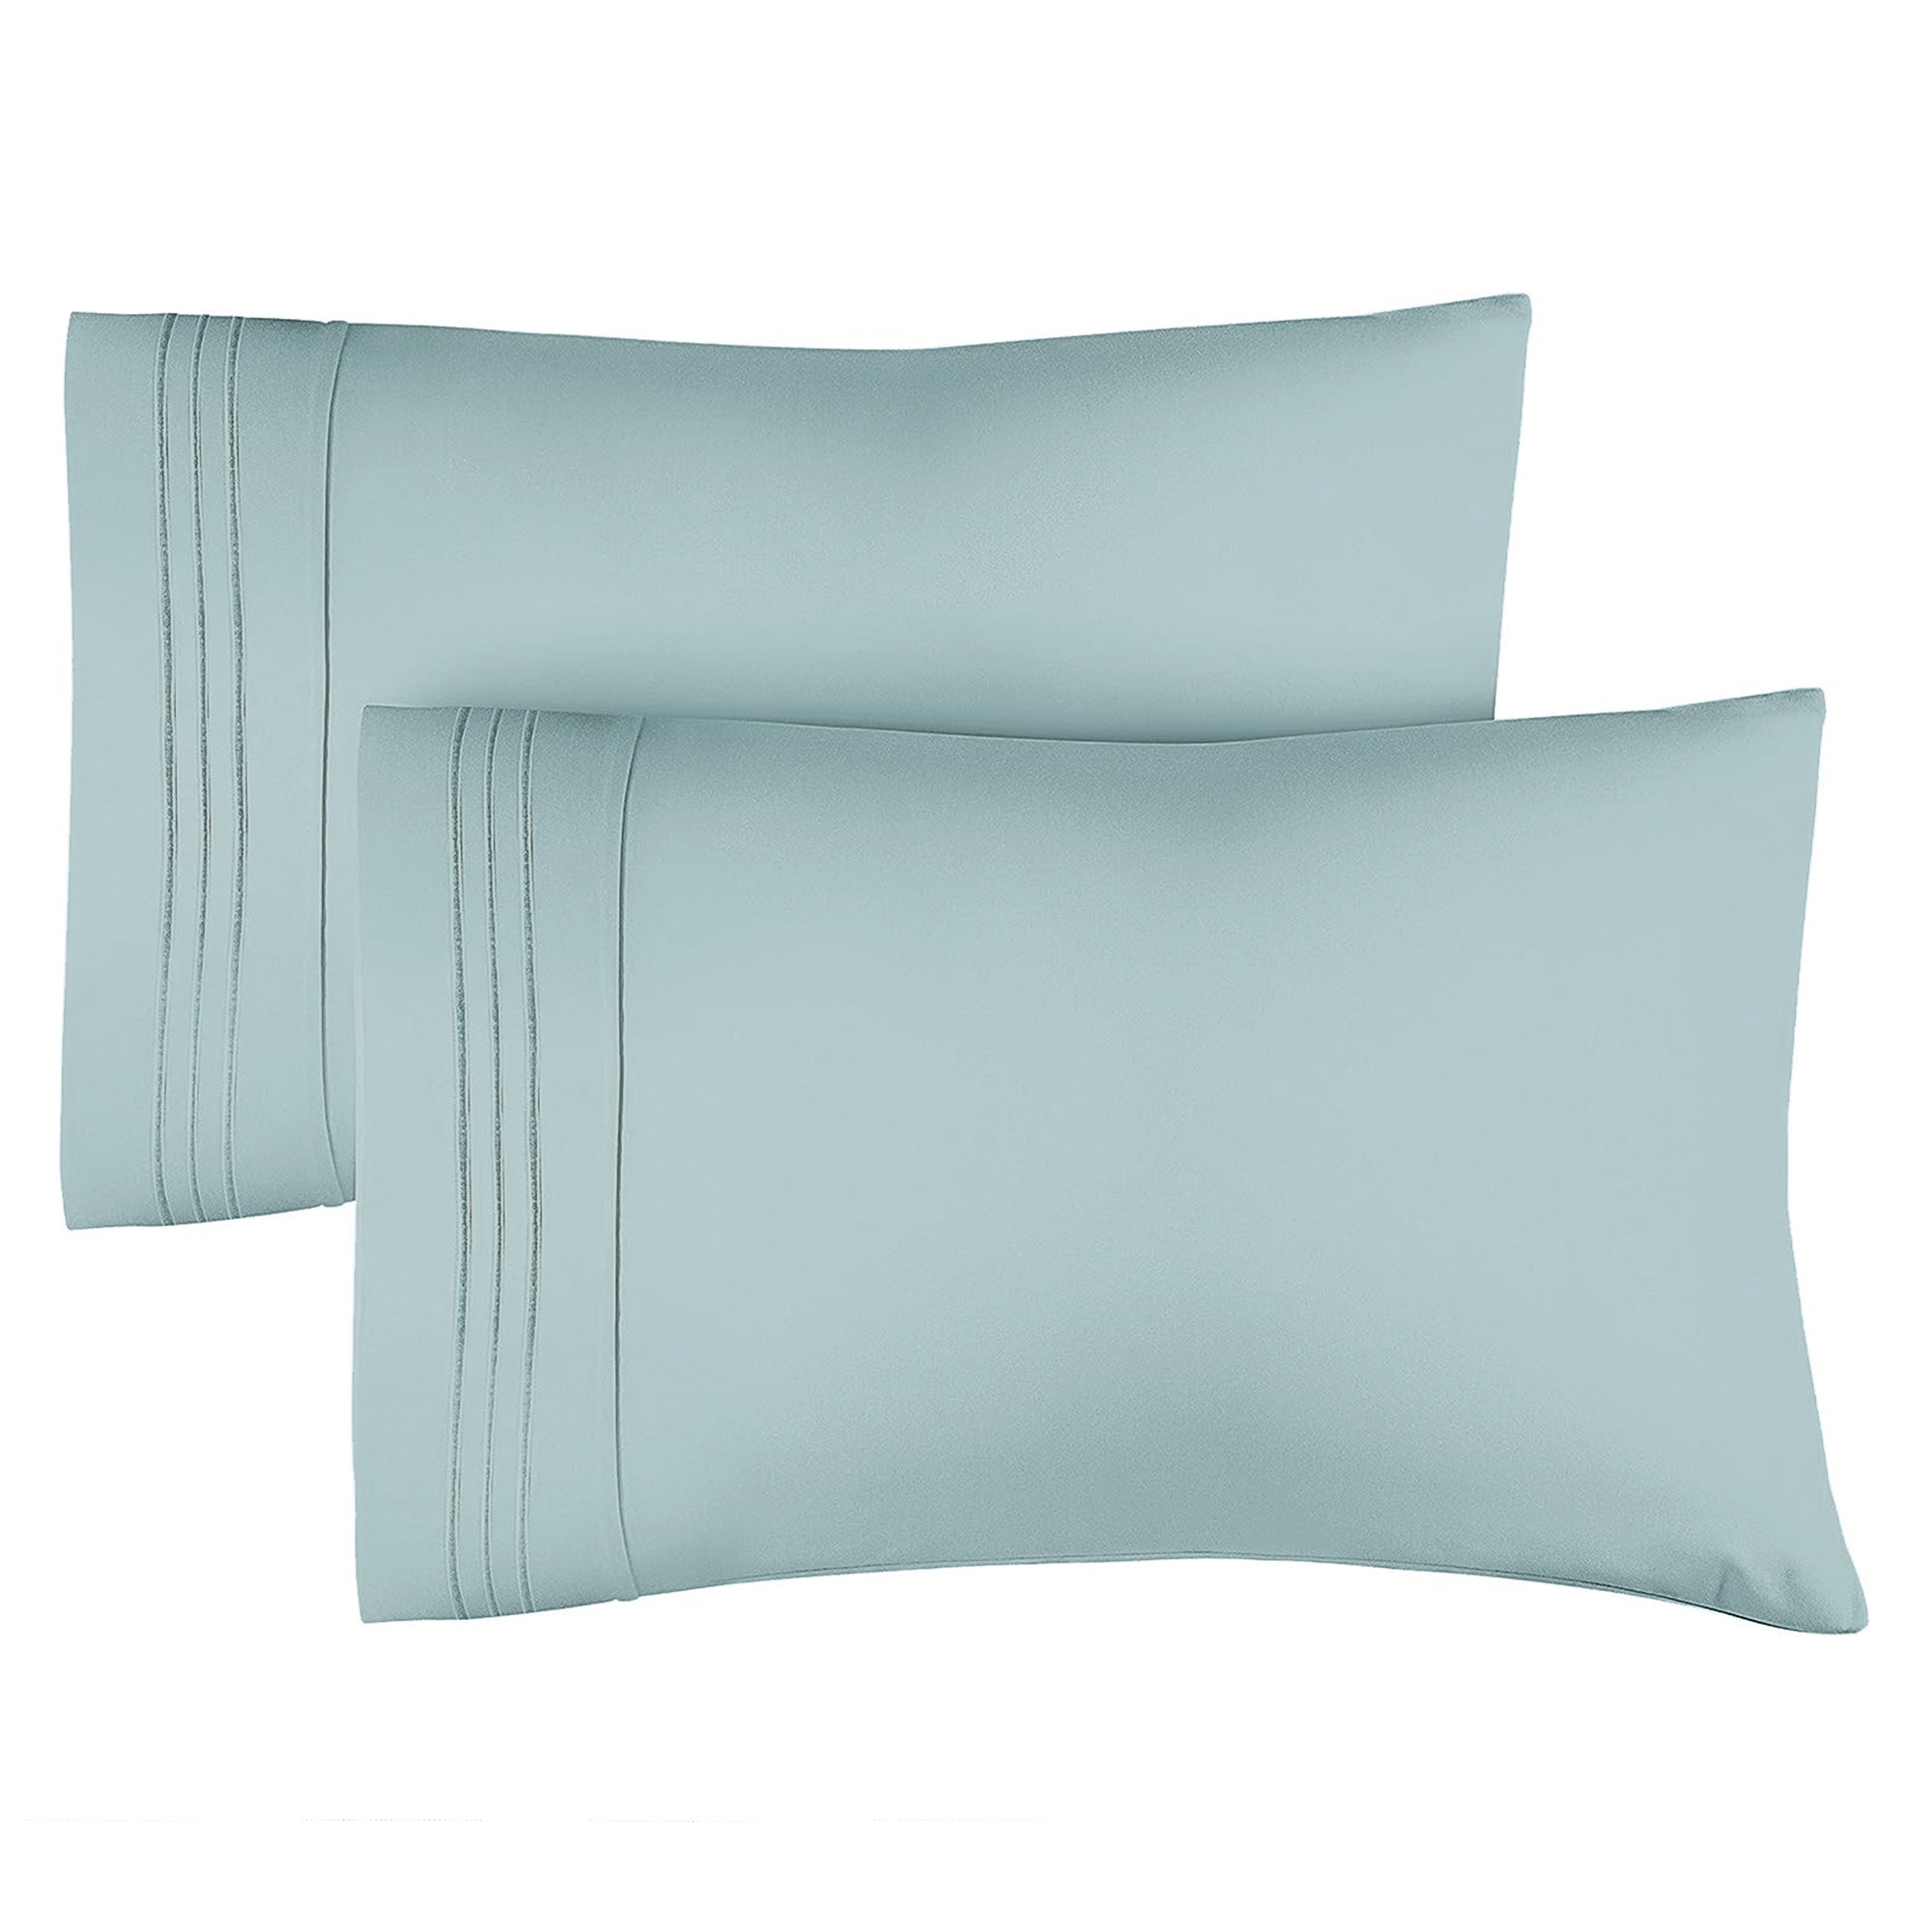 2 Pillowcase Set - Light Blue